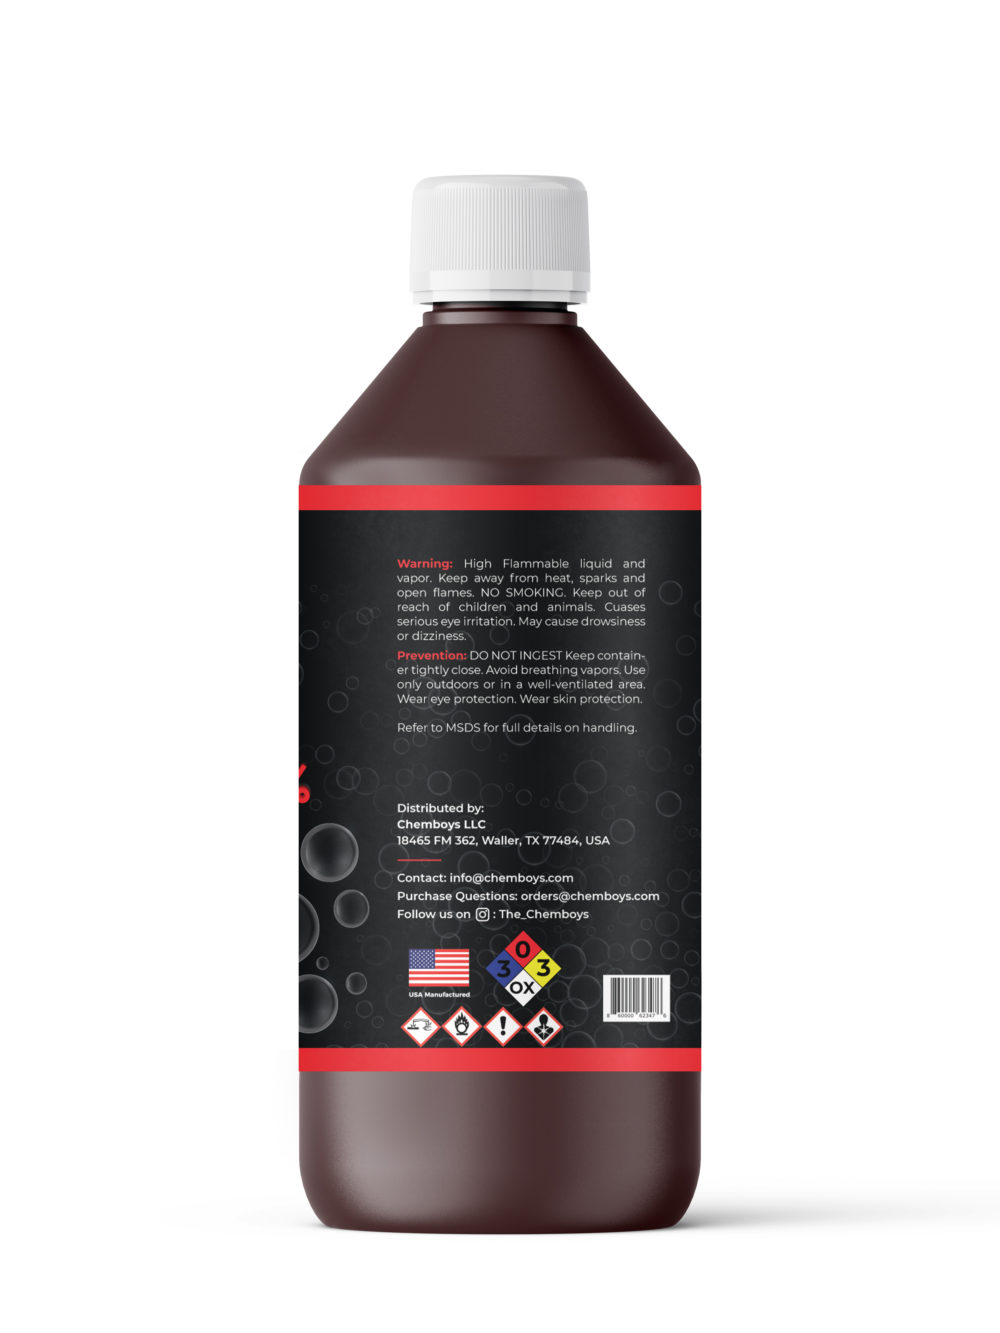 hydrogen_peroxide_34%_quart_bottle_right_view